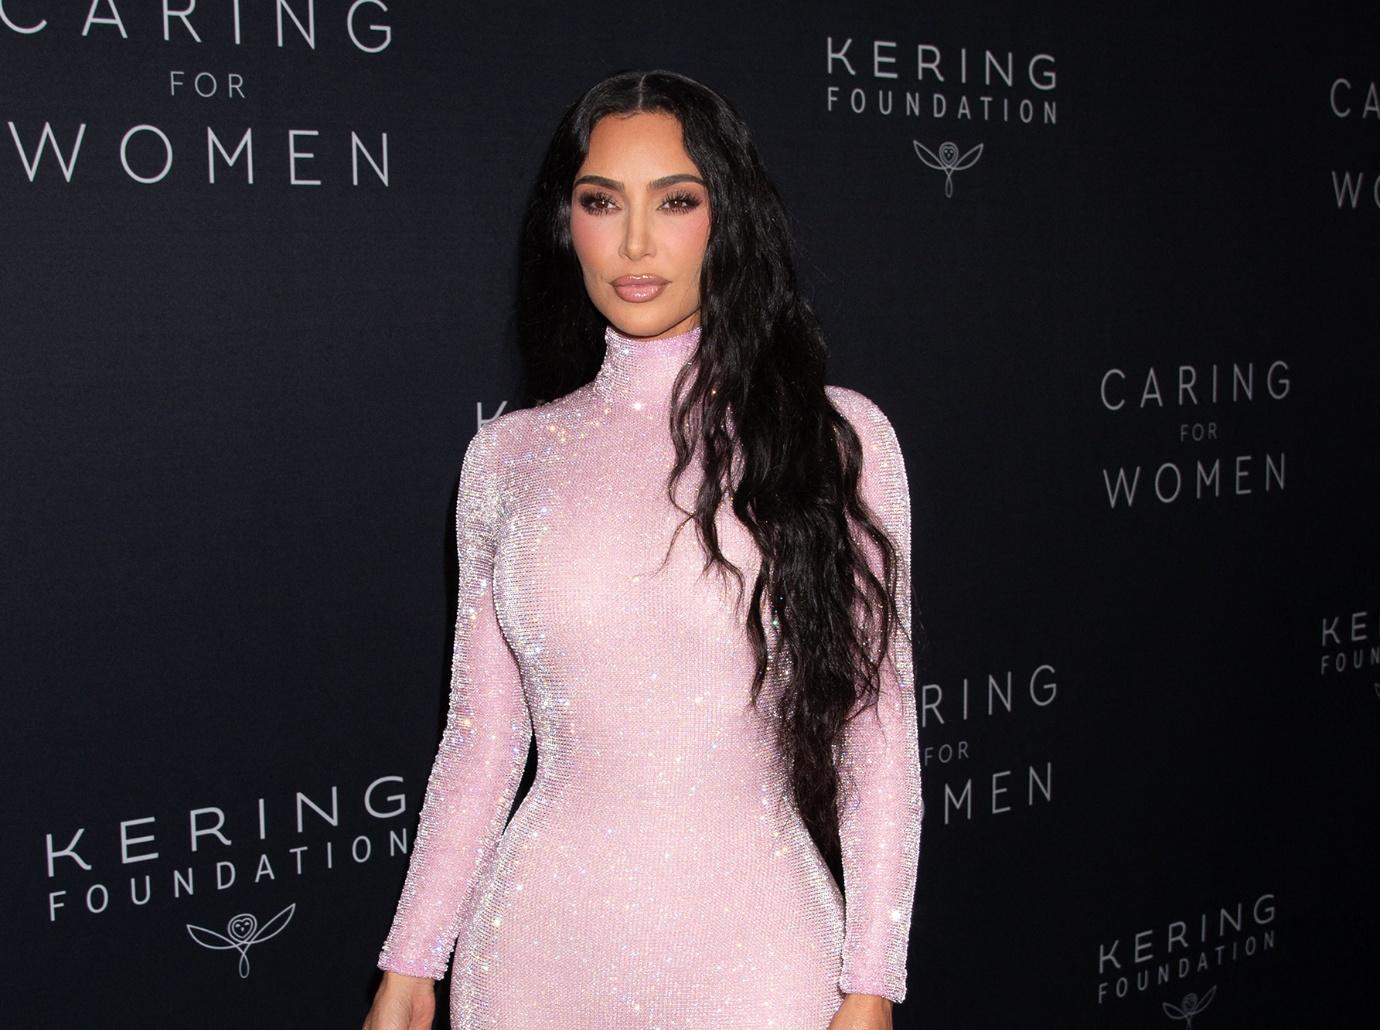 Kim Kardashian Stuns In Glittery Gown At NYFW Dinner: Photos